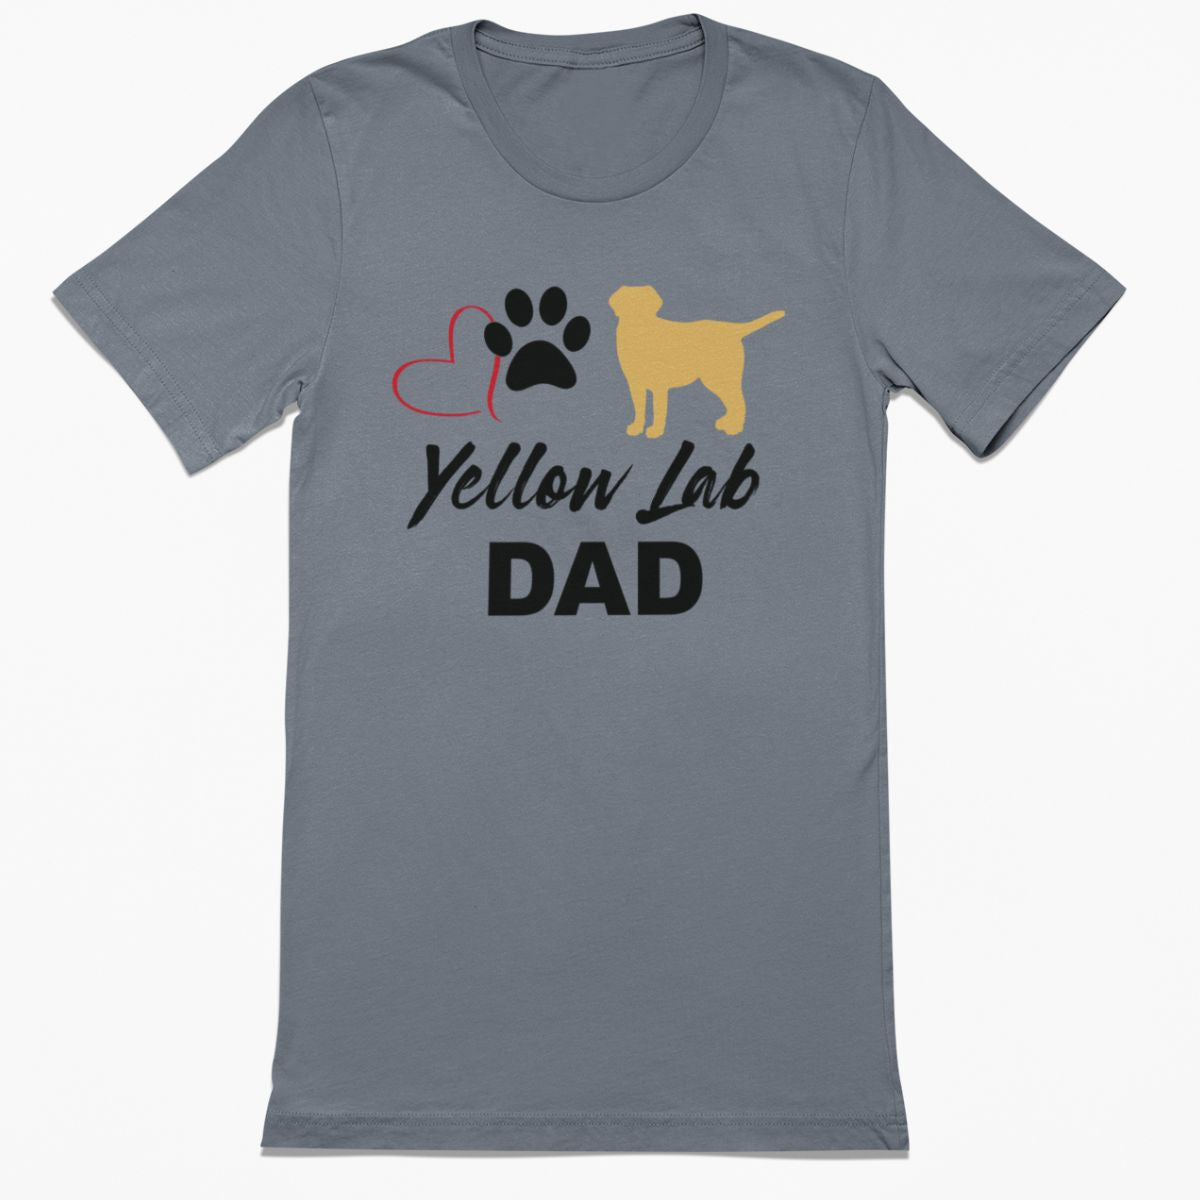 Yellow Lab Dad Shirt